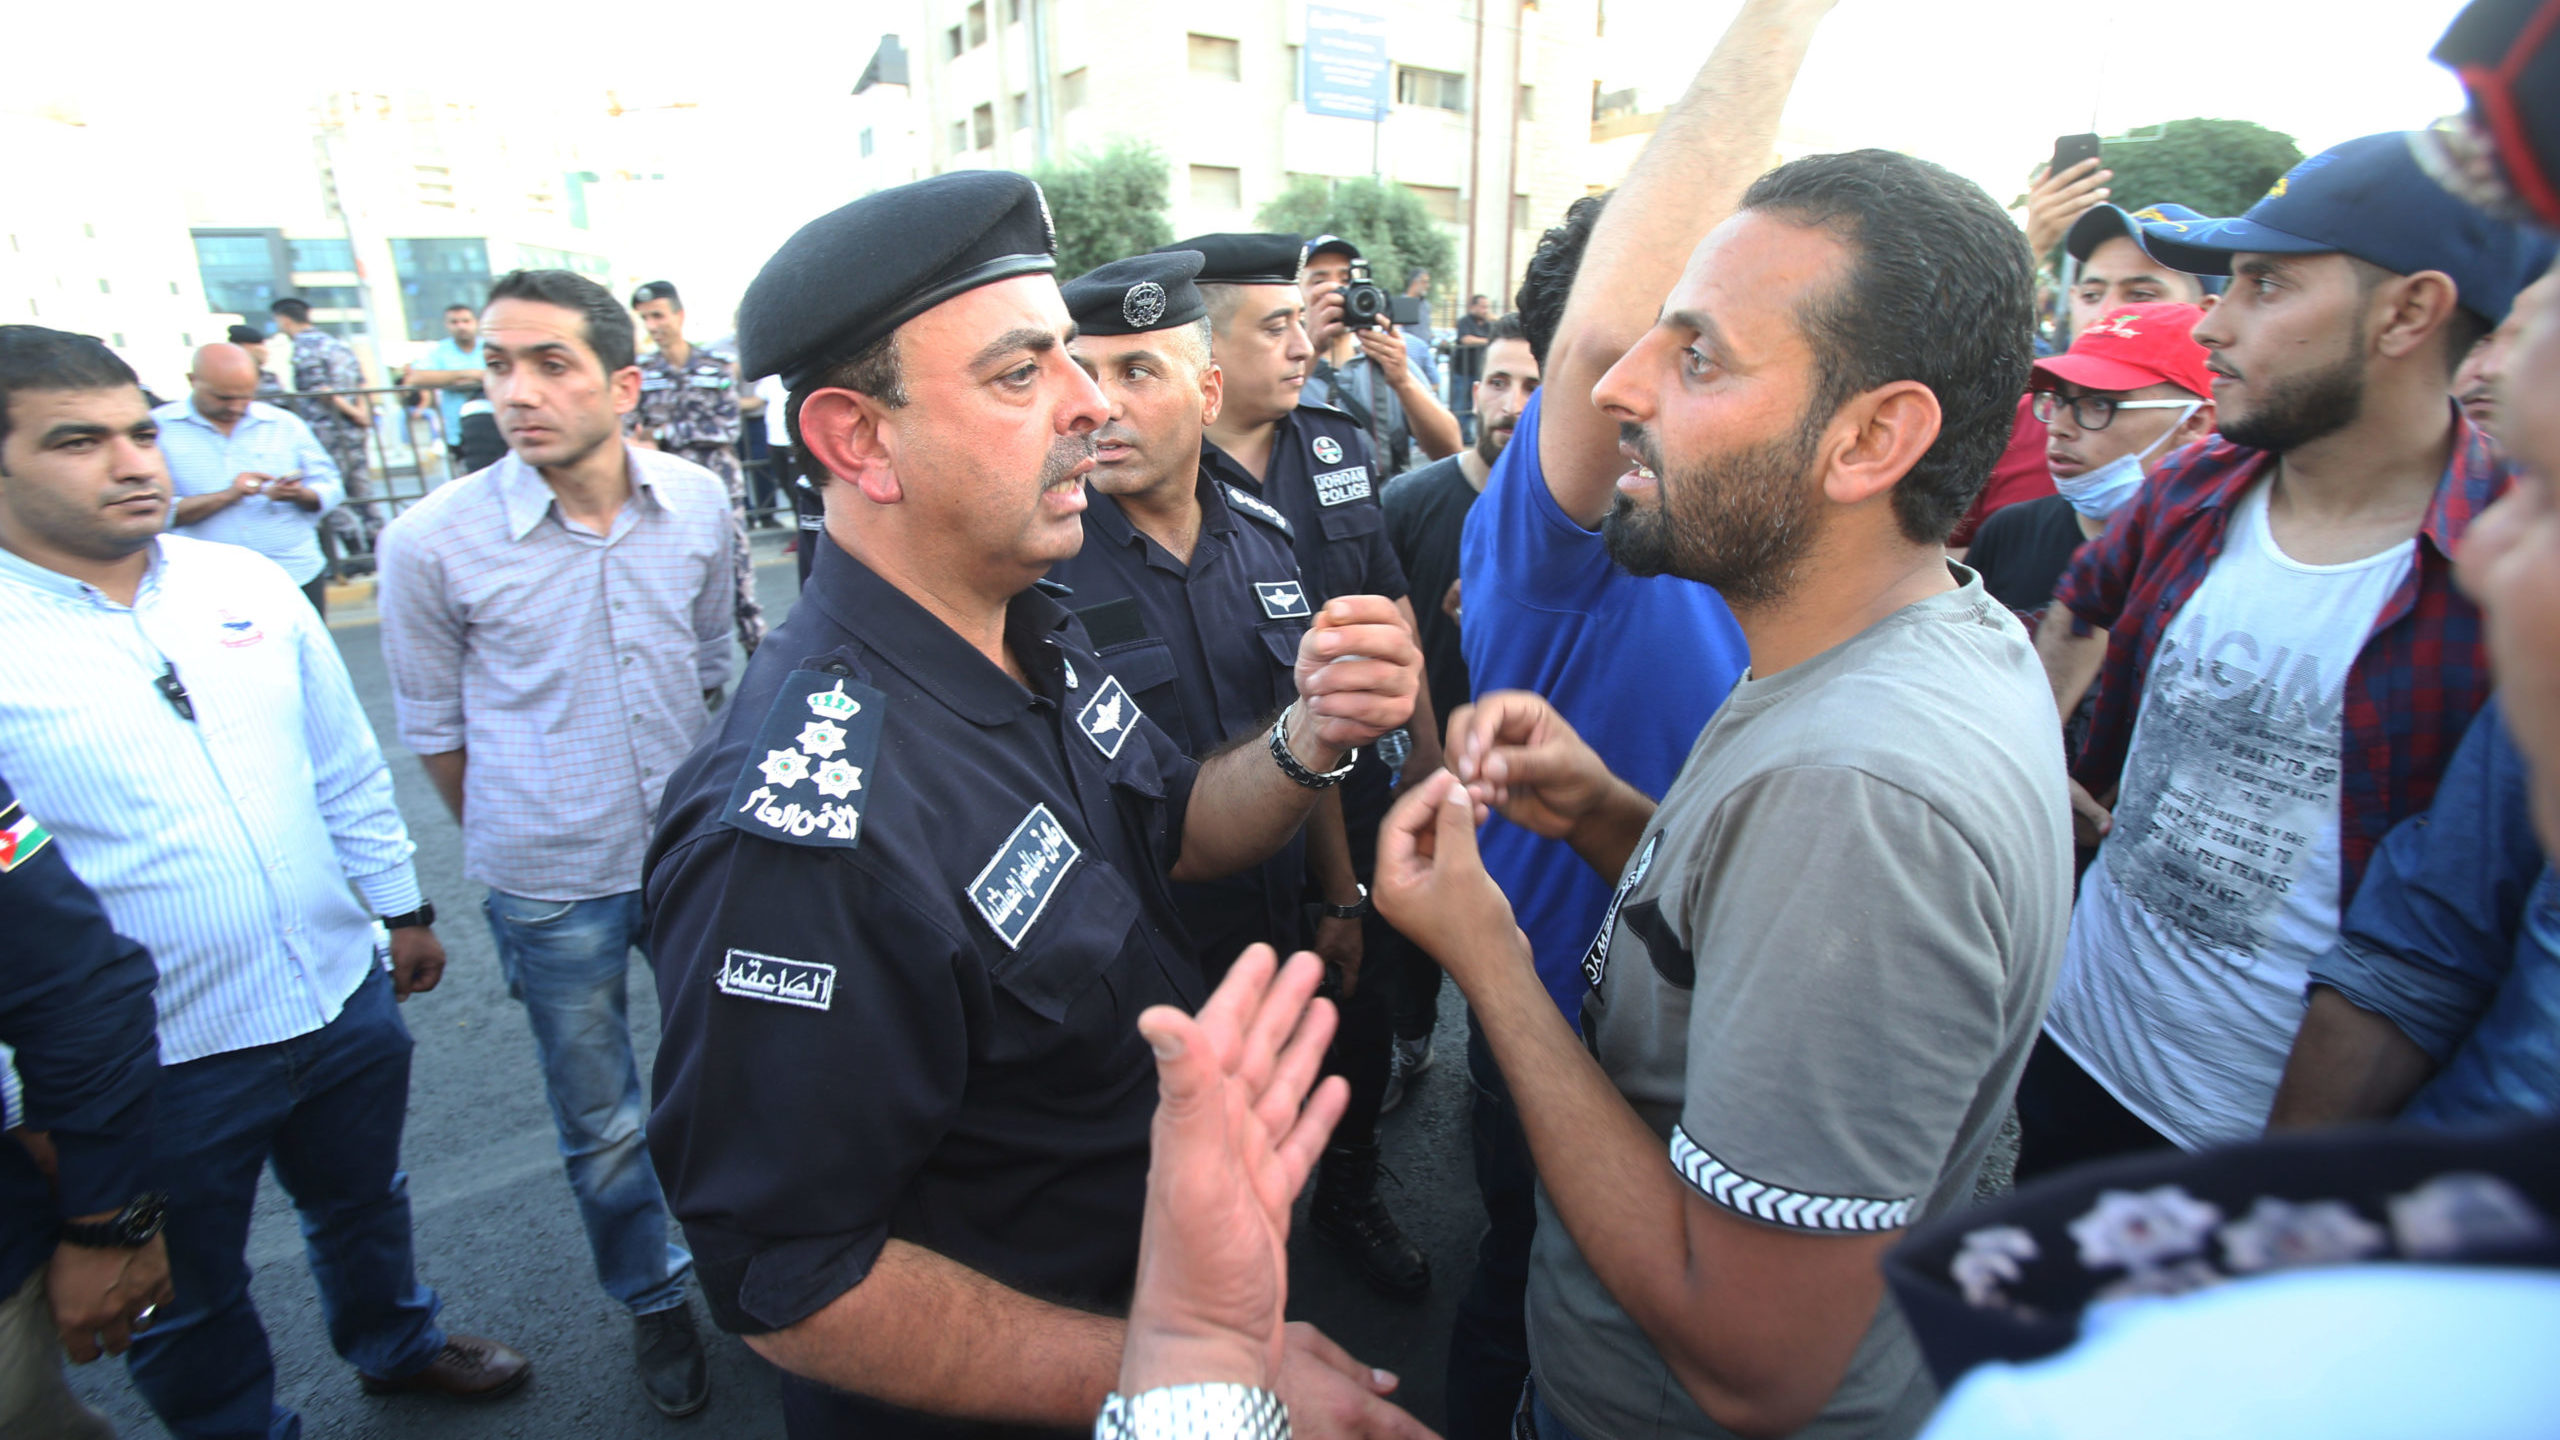 Jordanians Confront Police After Union Leaders Arrested